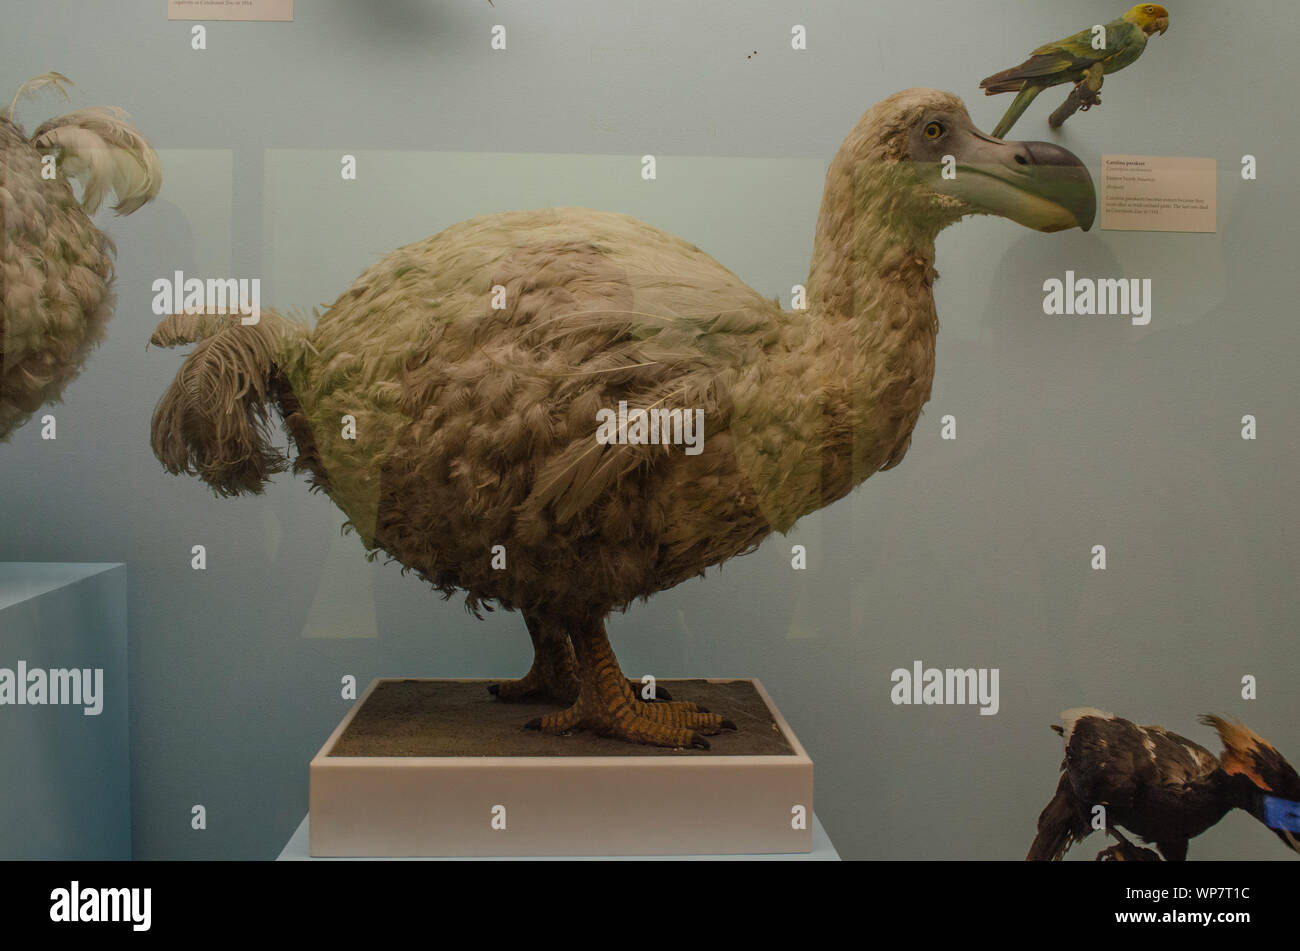 stuffed dodo bird